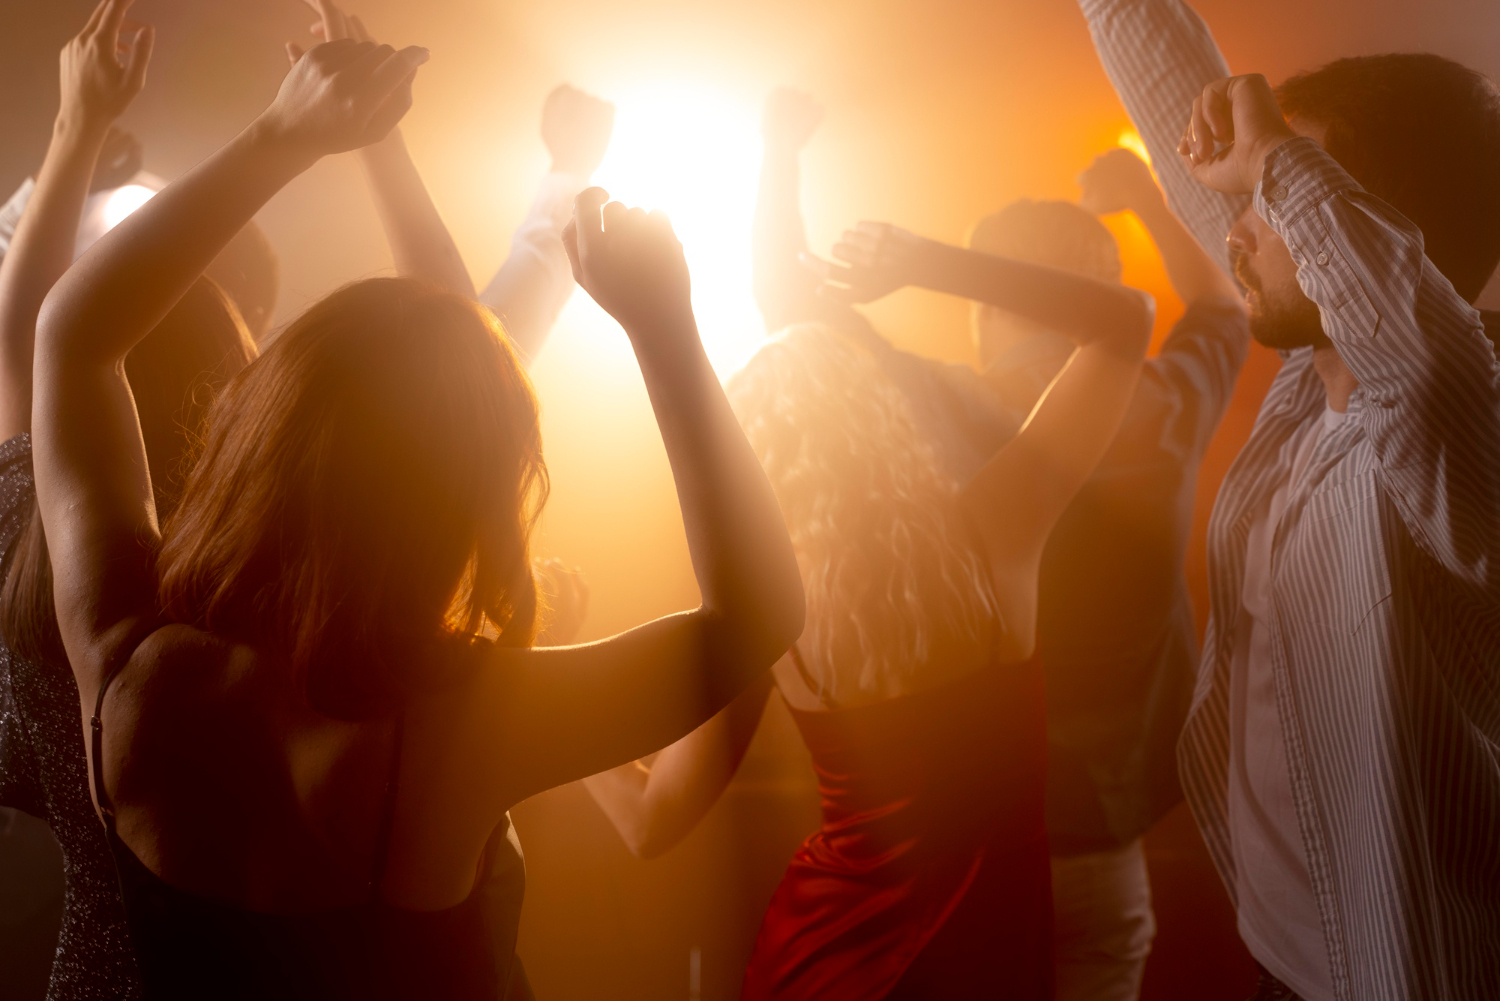 close up of people at nightclub having fun dancing together